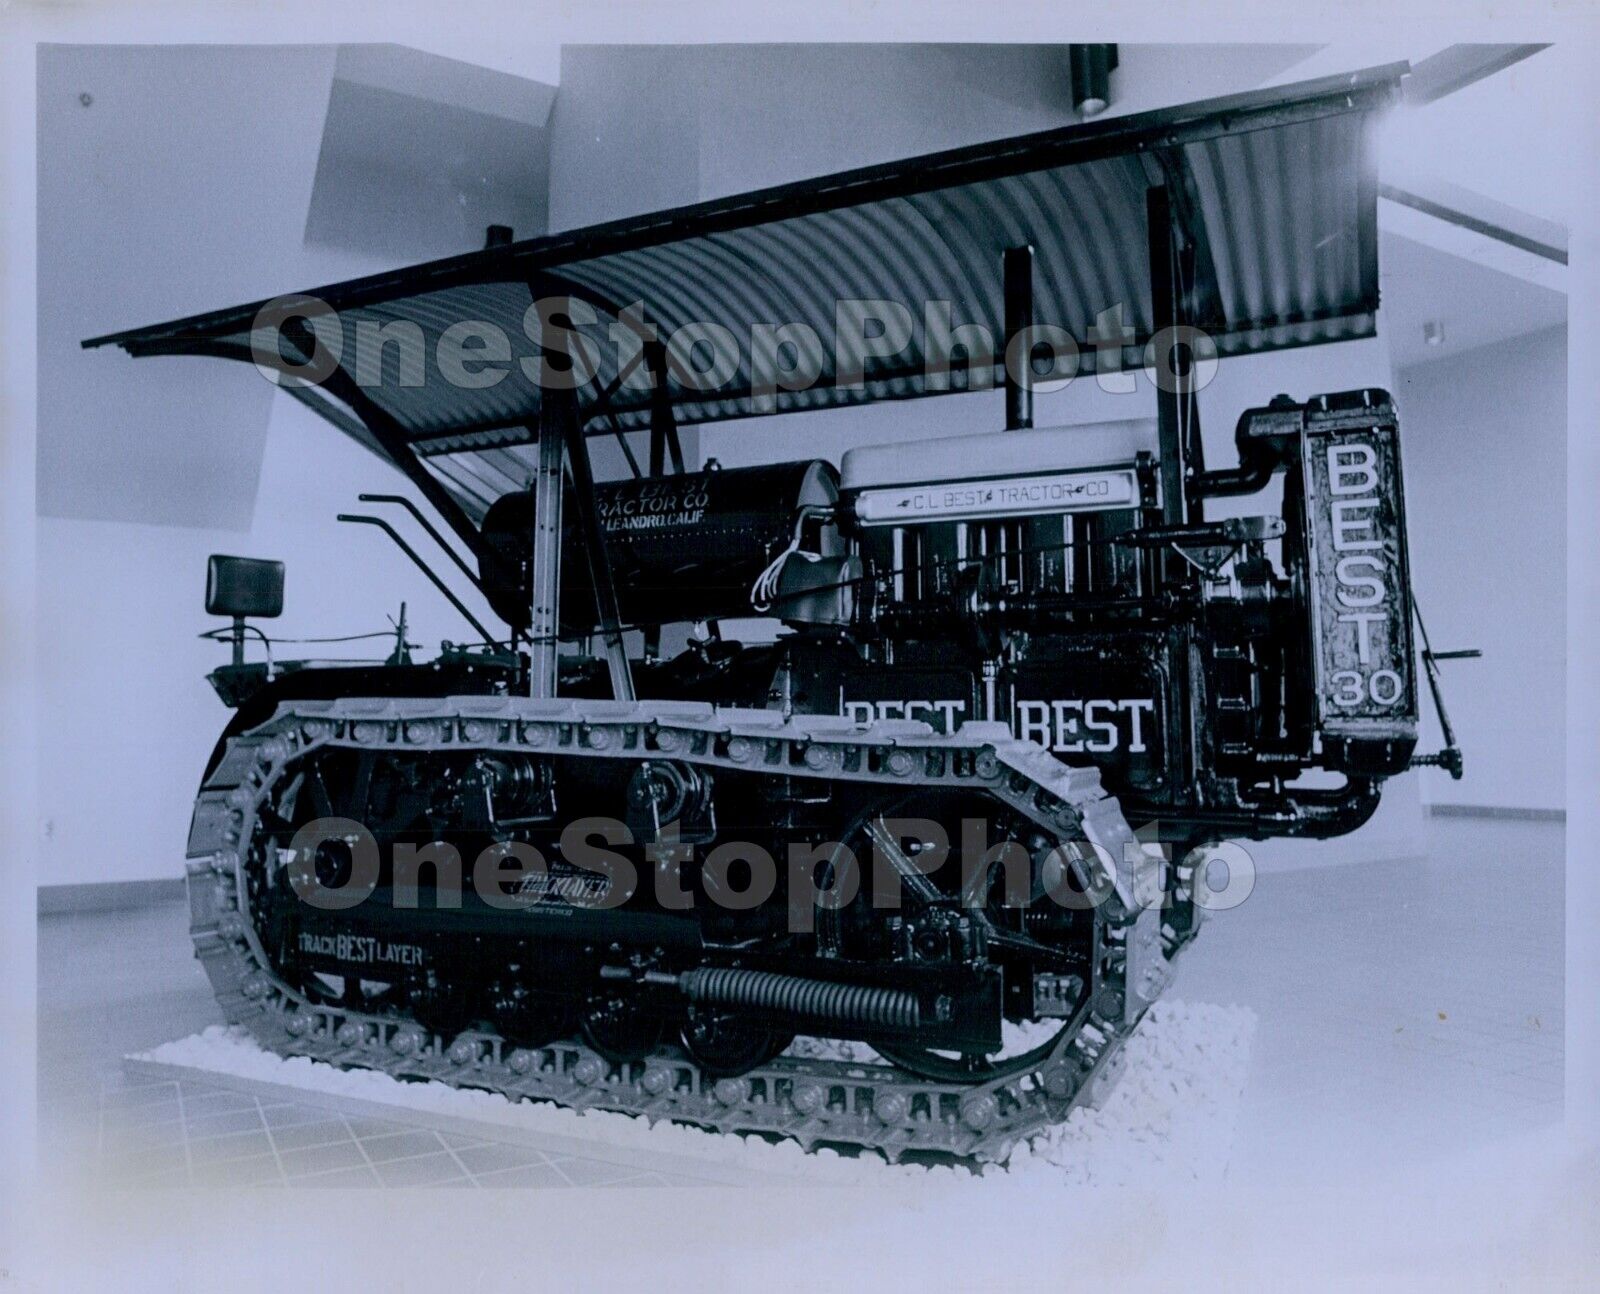 1983 San Leandro Old Restored BEST Tractor Catetpillar Plant Press Photo